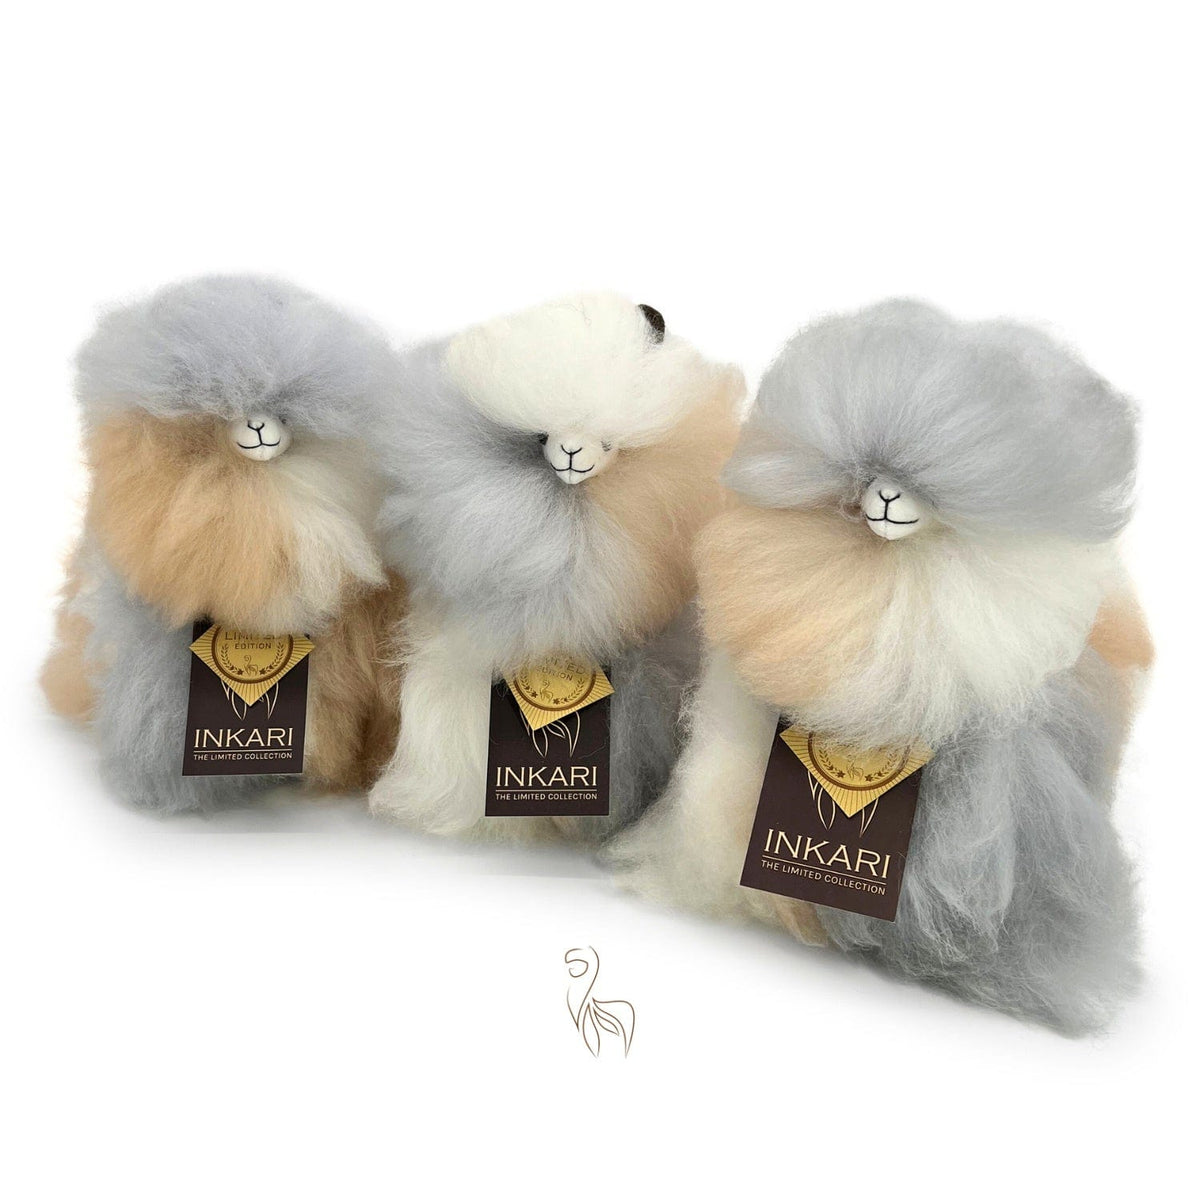 Monsterfluff Seashell - Small Alpaca Toy (23cm) - Limited Edition